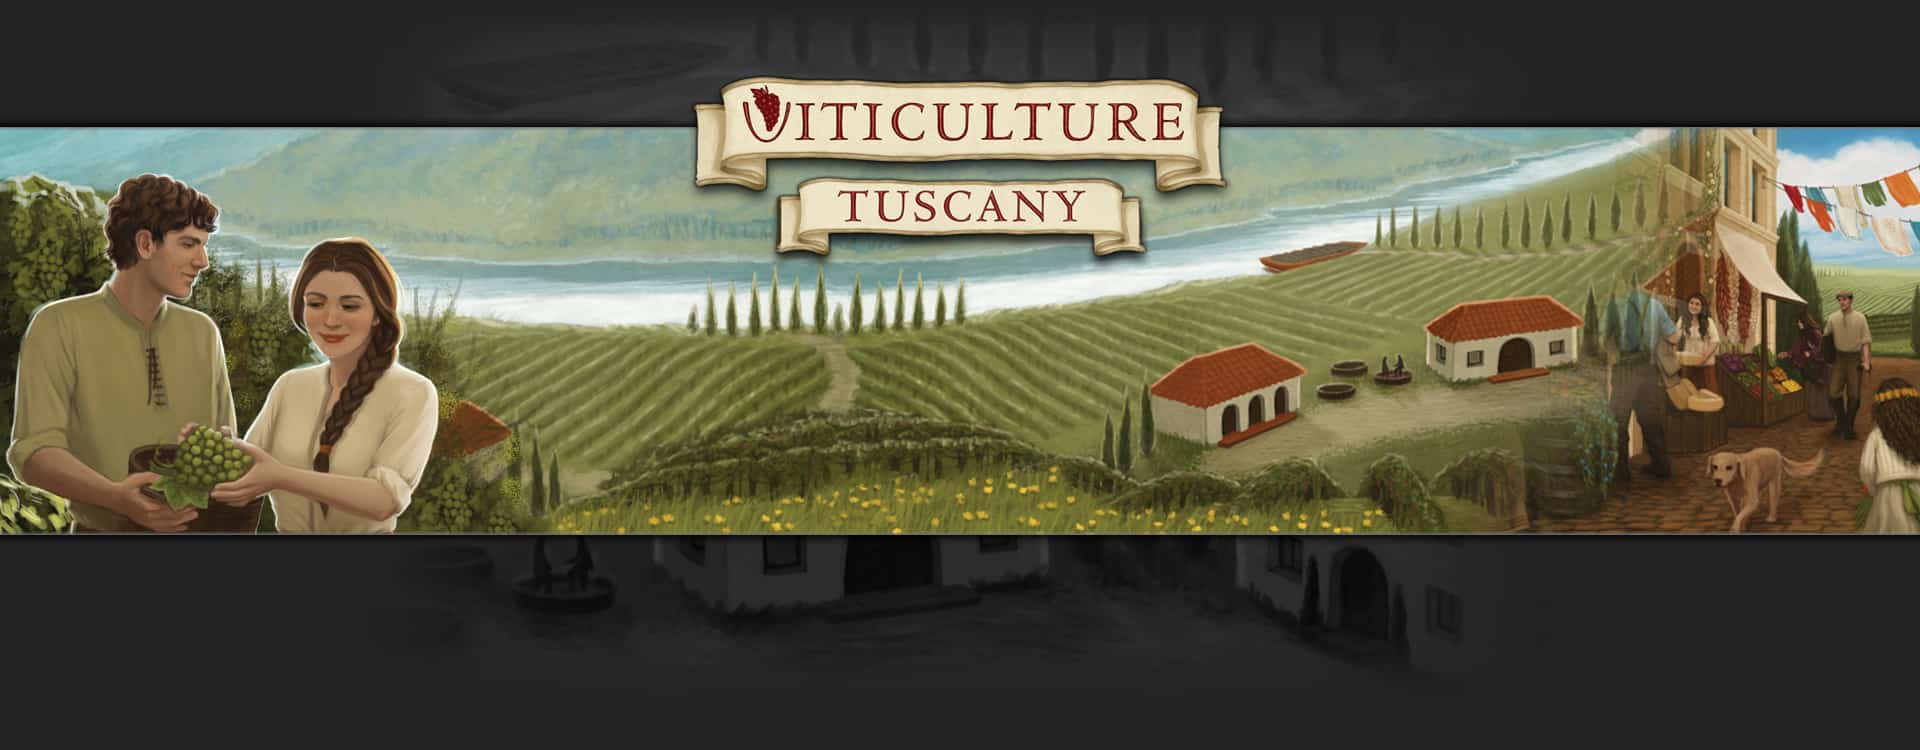 Viticulture & Tuscny